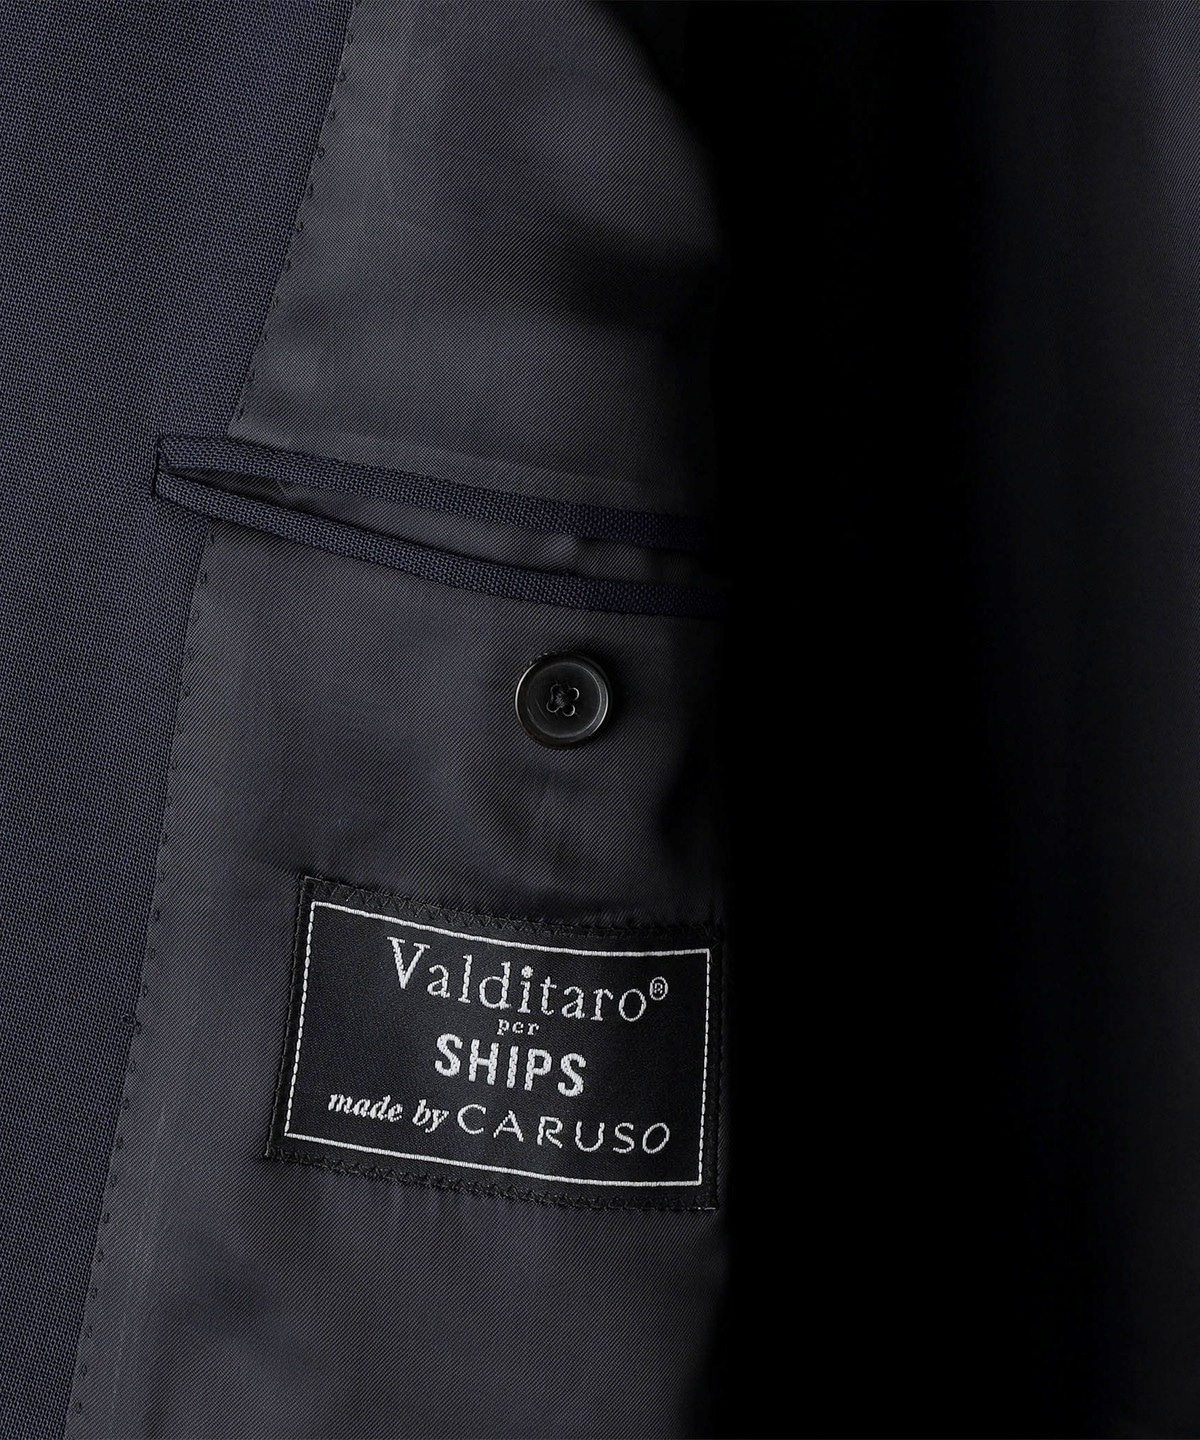 VALDITARO: 無地 メタル ブレザー: スーツ/ビジネス小物 SHIPS 公式